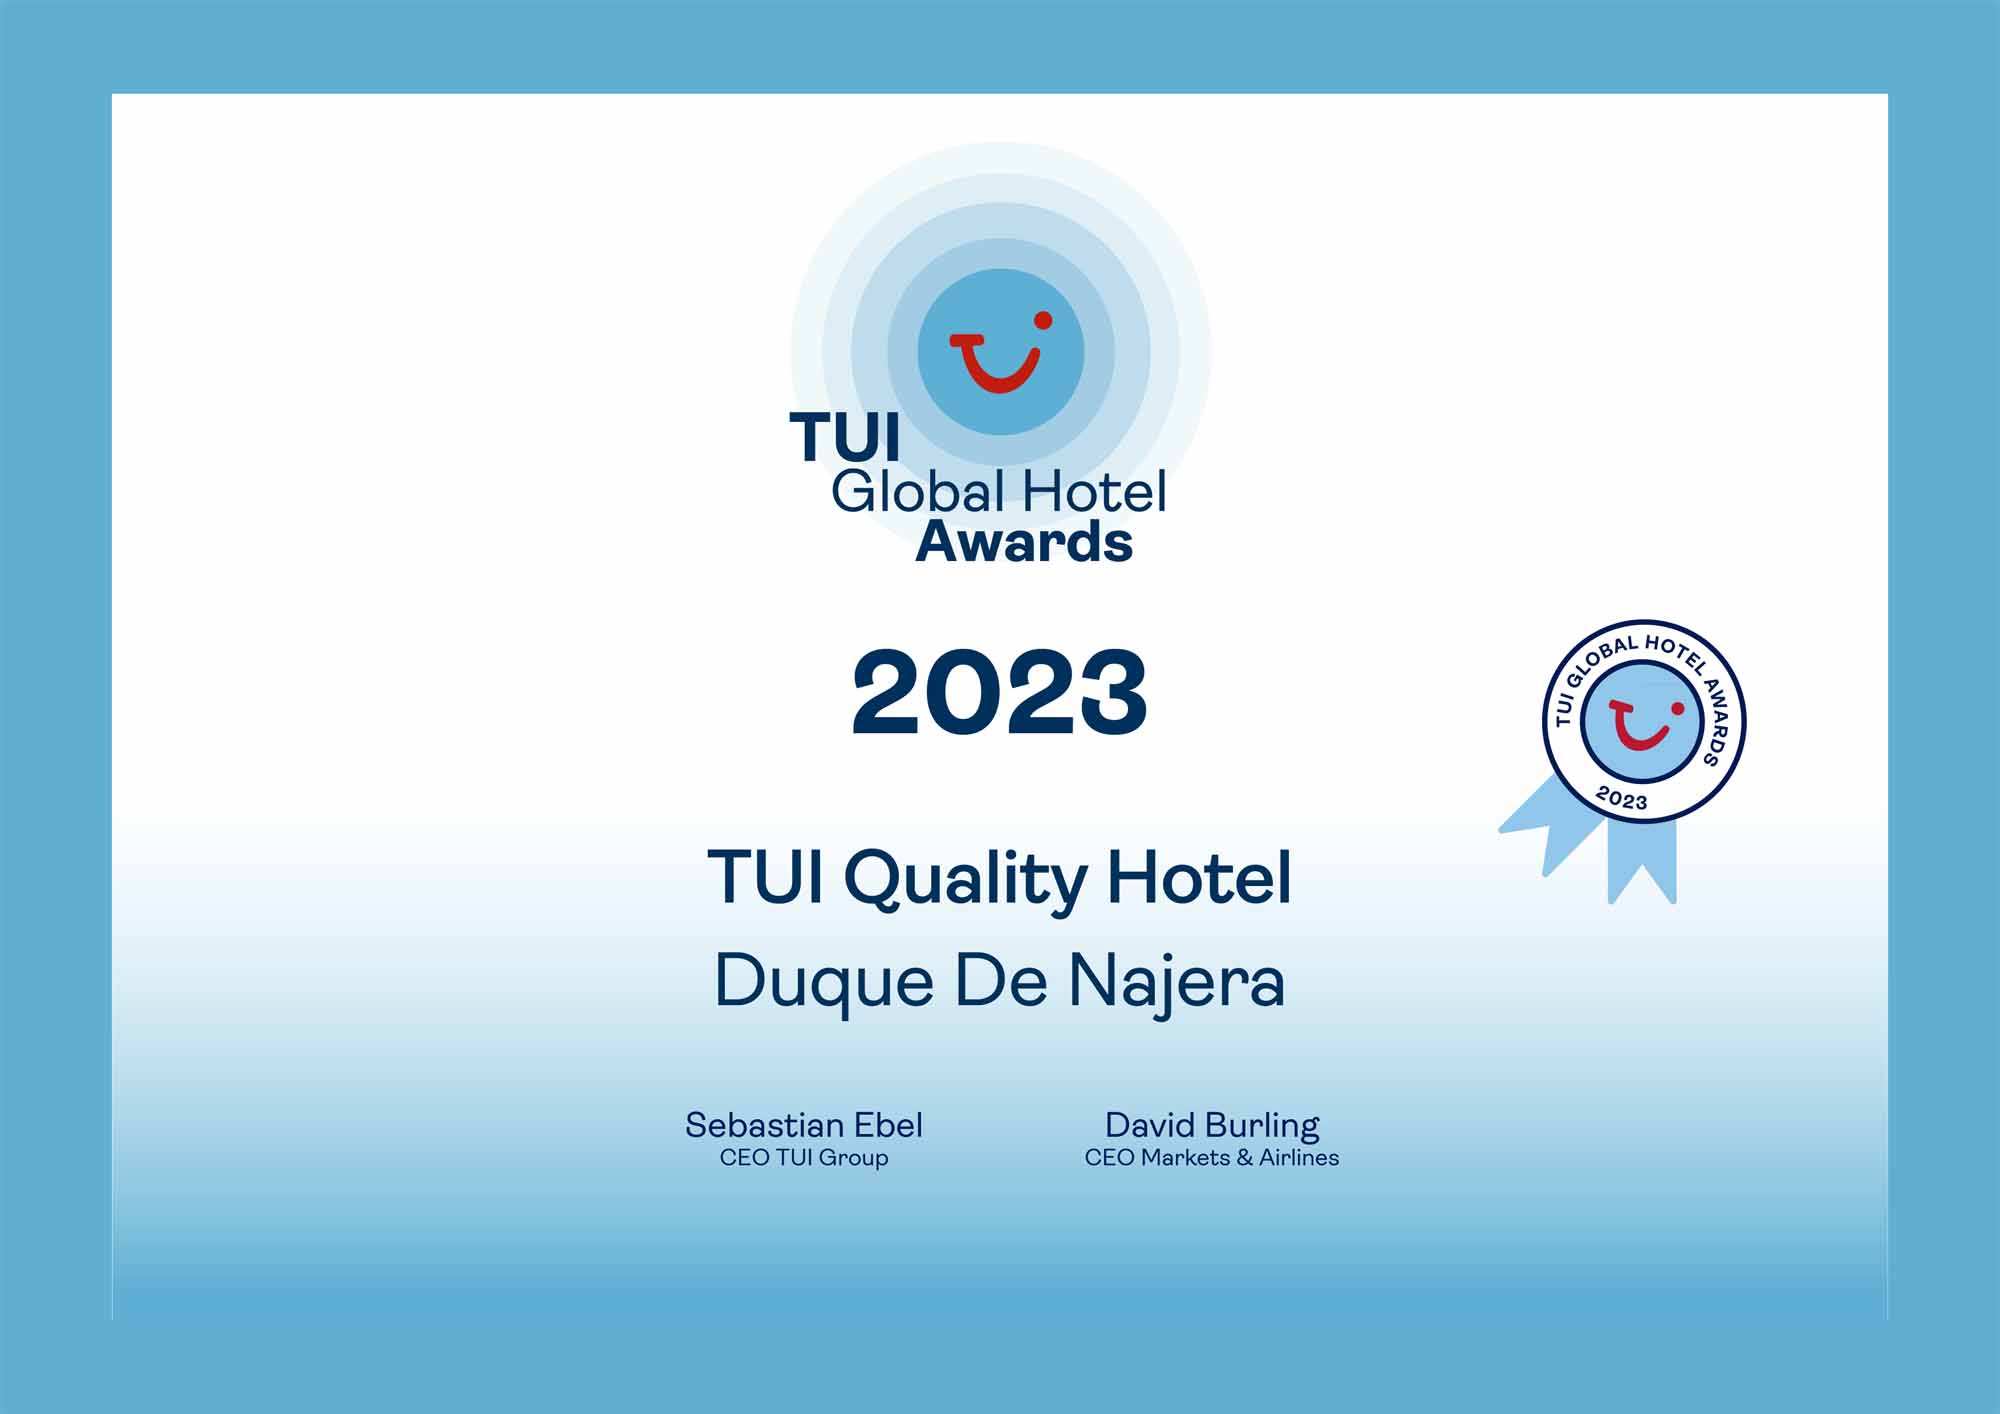 Hotel Duque de Nájera awarded with the TUI Quality Award - HACE